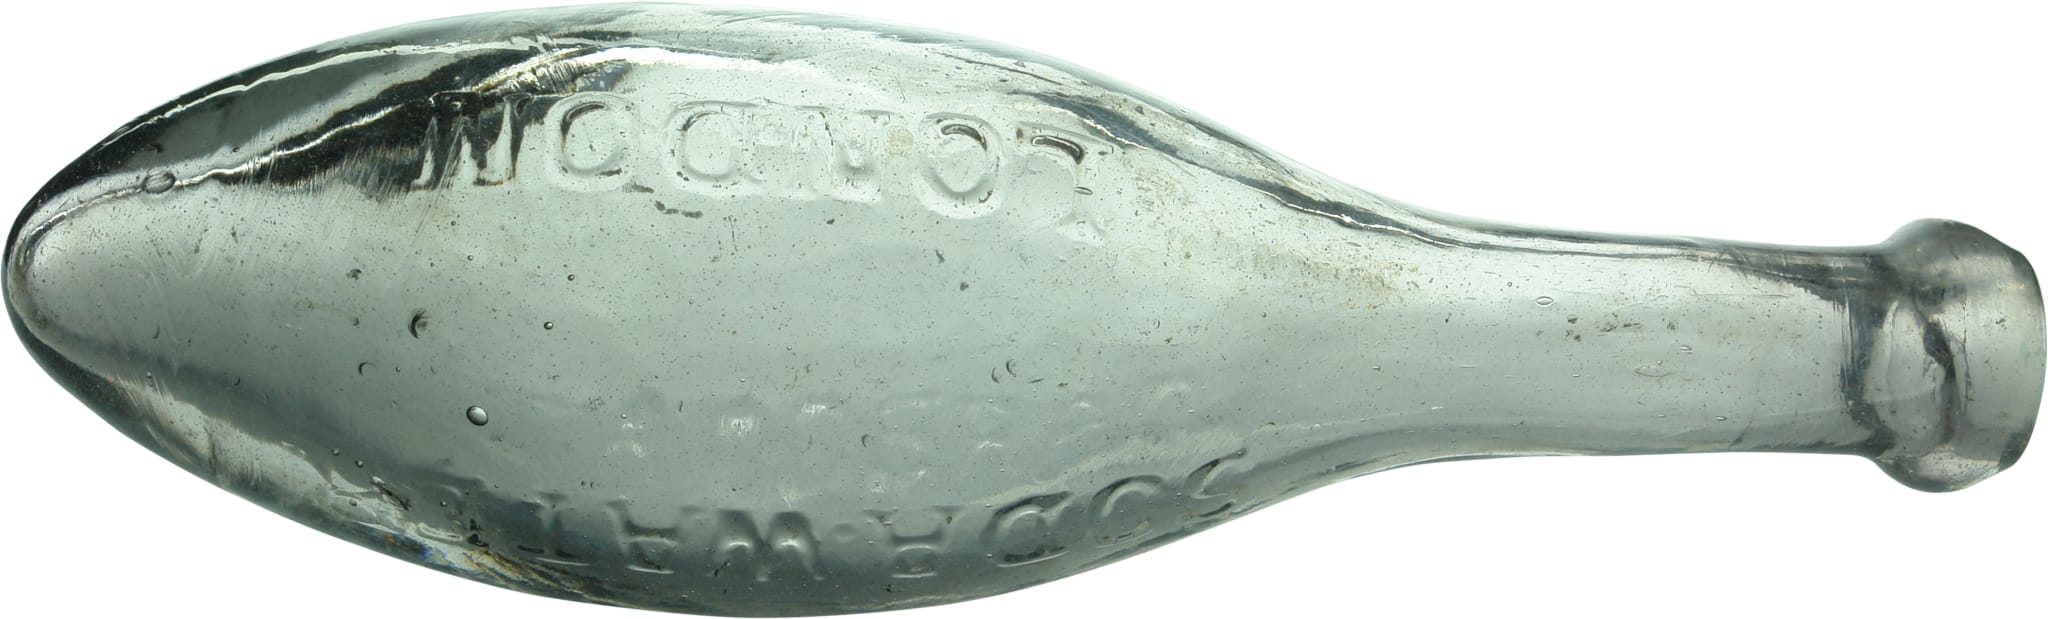 Double Carbonated Soda Water London Torpedo Bottle